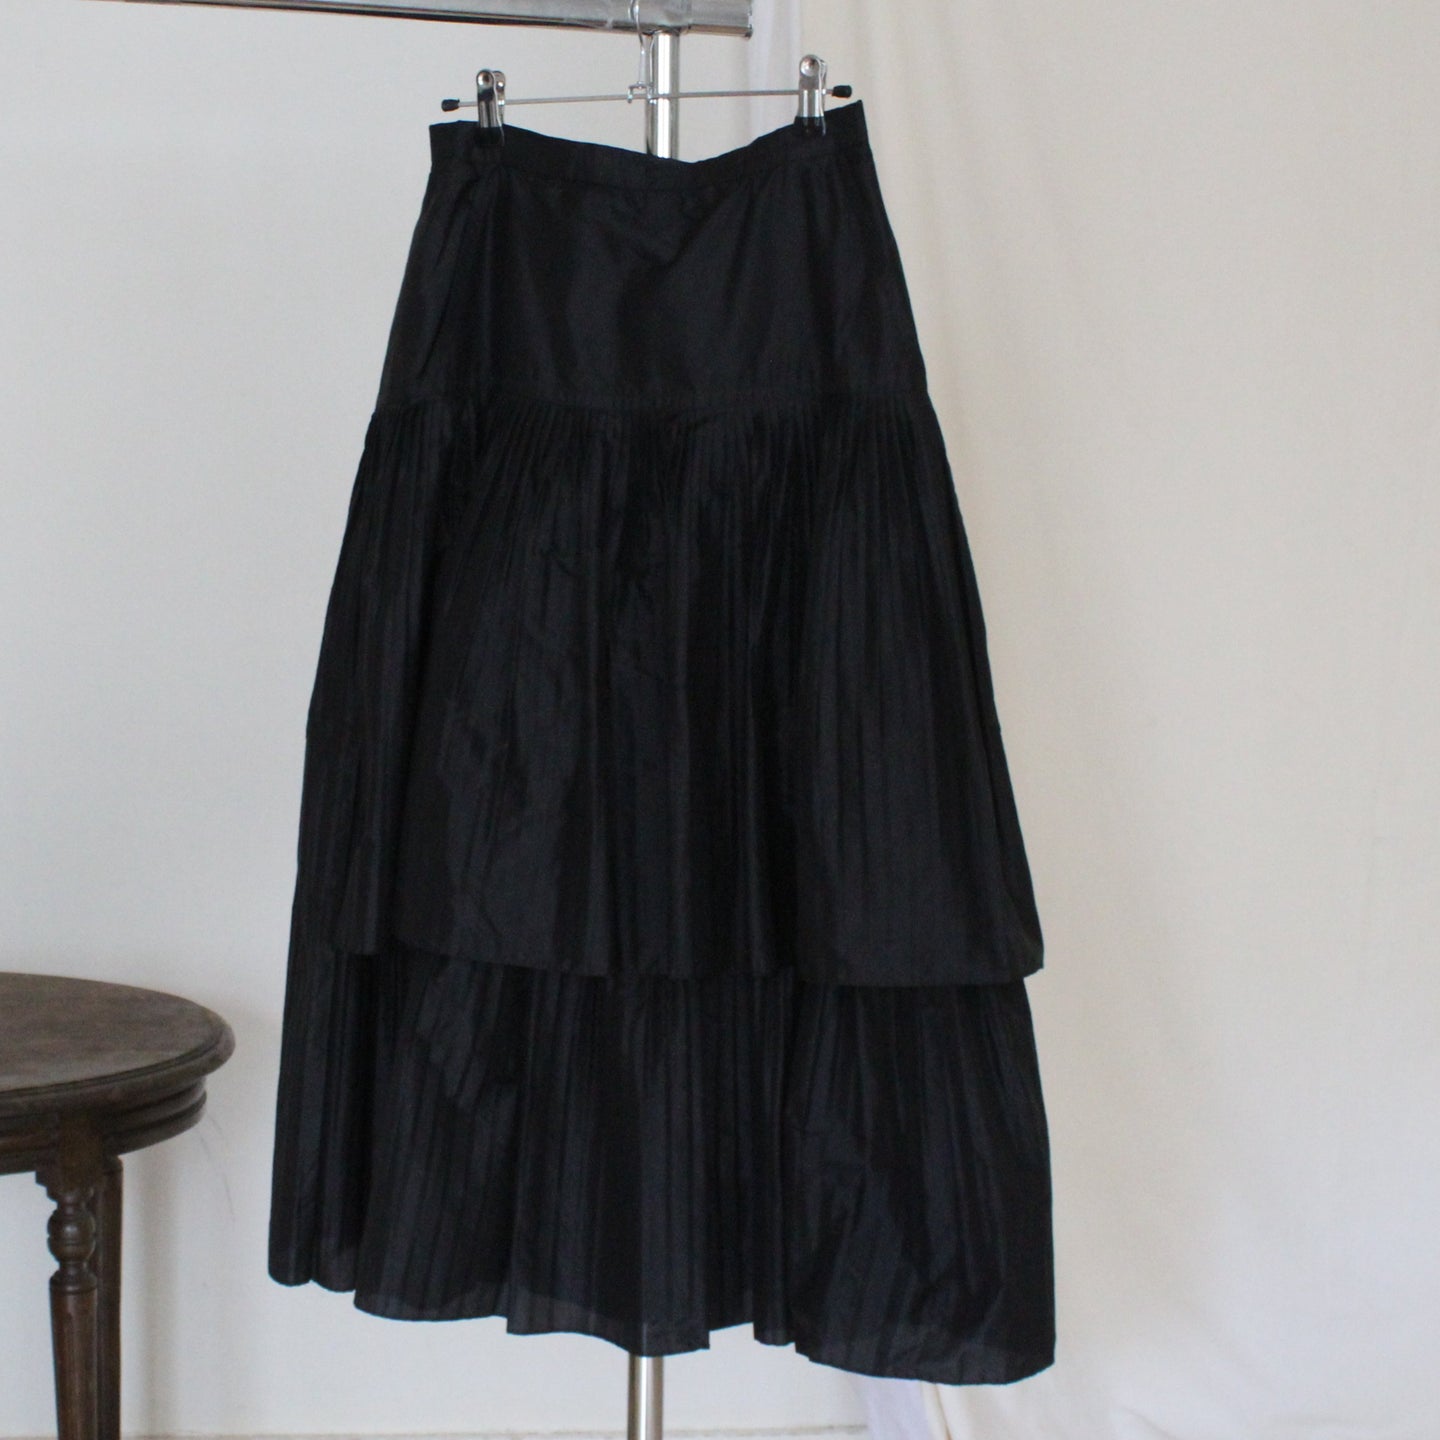 Vintage dramatic crepe skirt, size XS